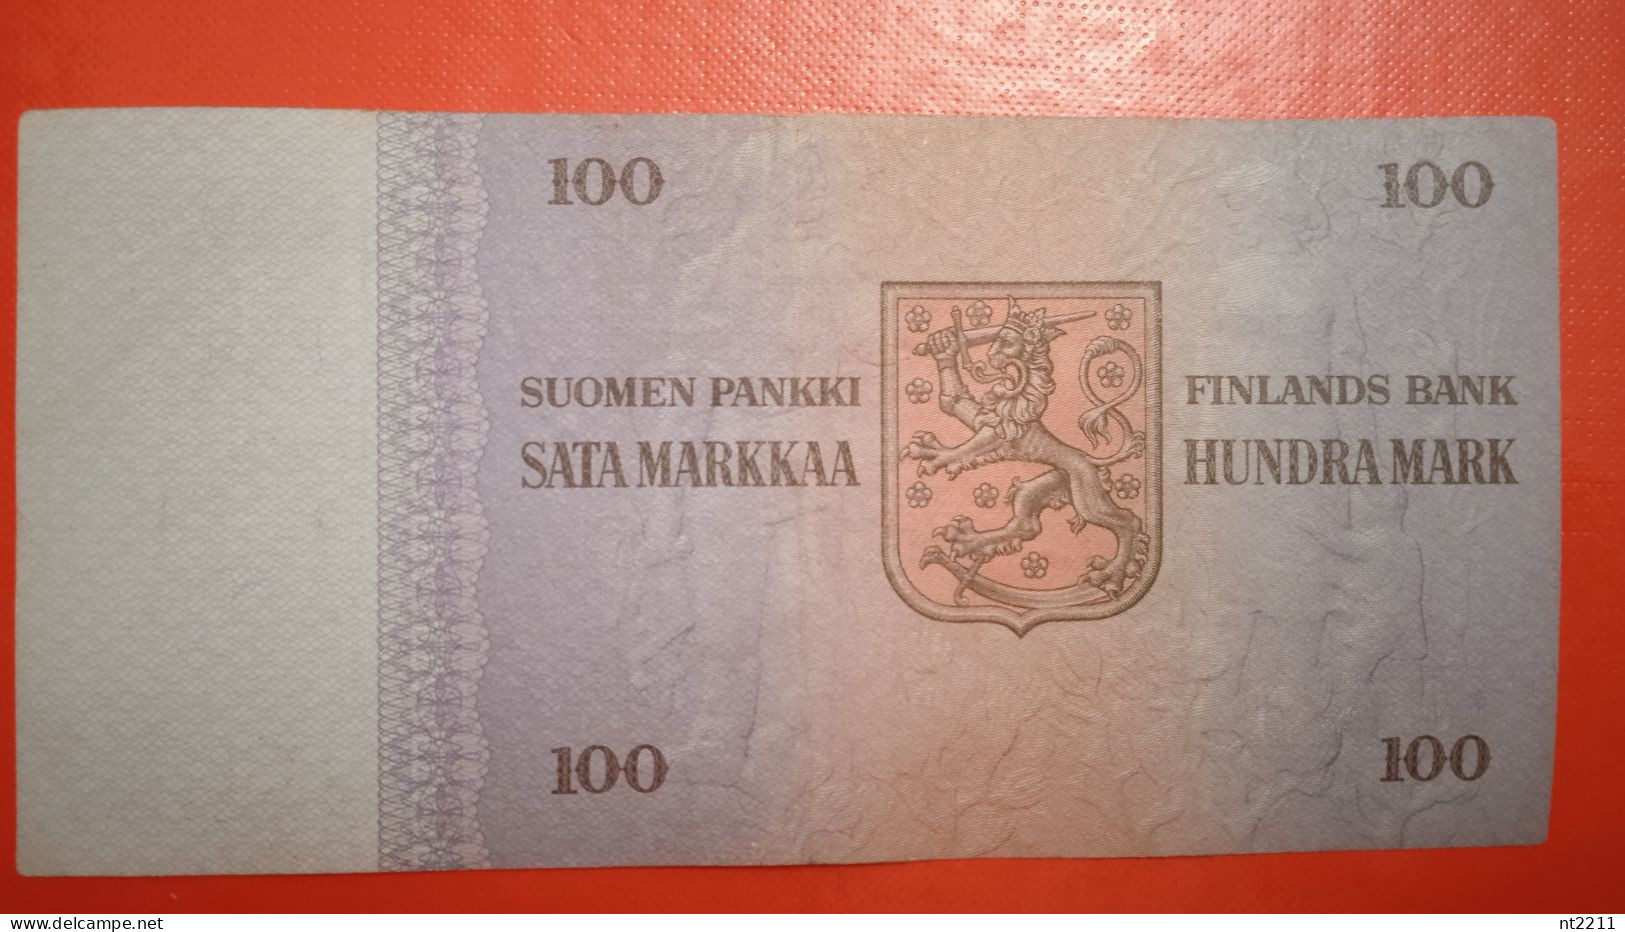 Banknote 100 Marka Finland 1976 - Finland